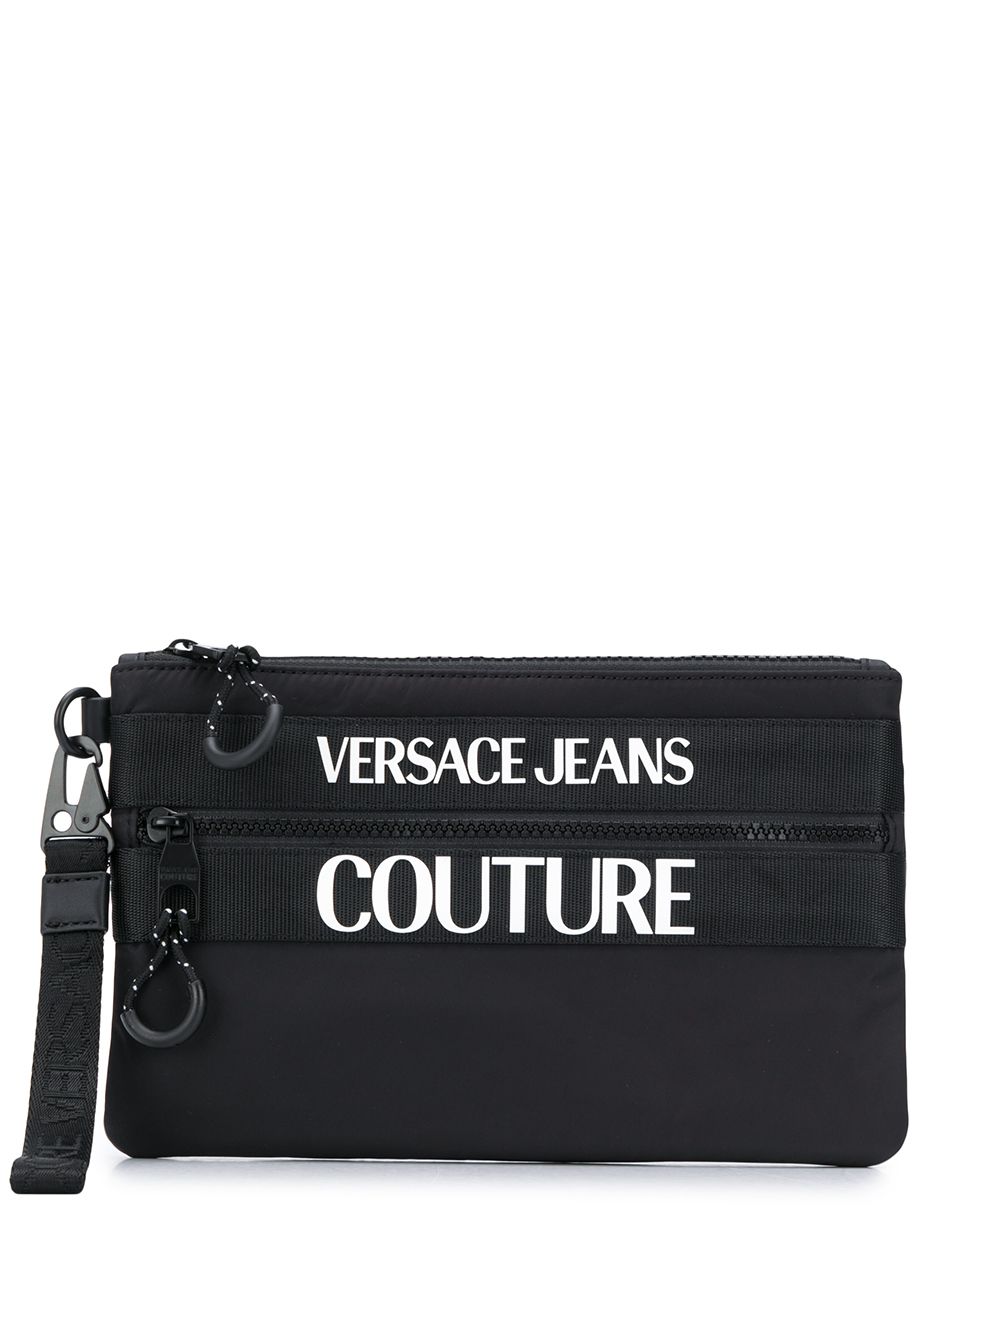 фото Versace jeans couture клатч с тисненым логотипом